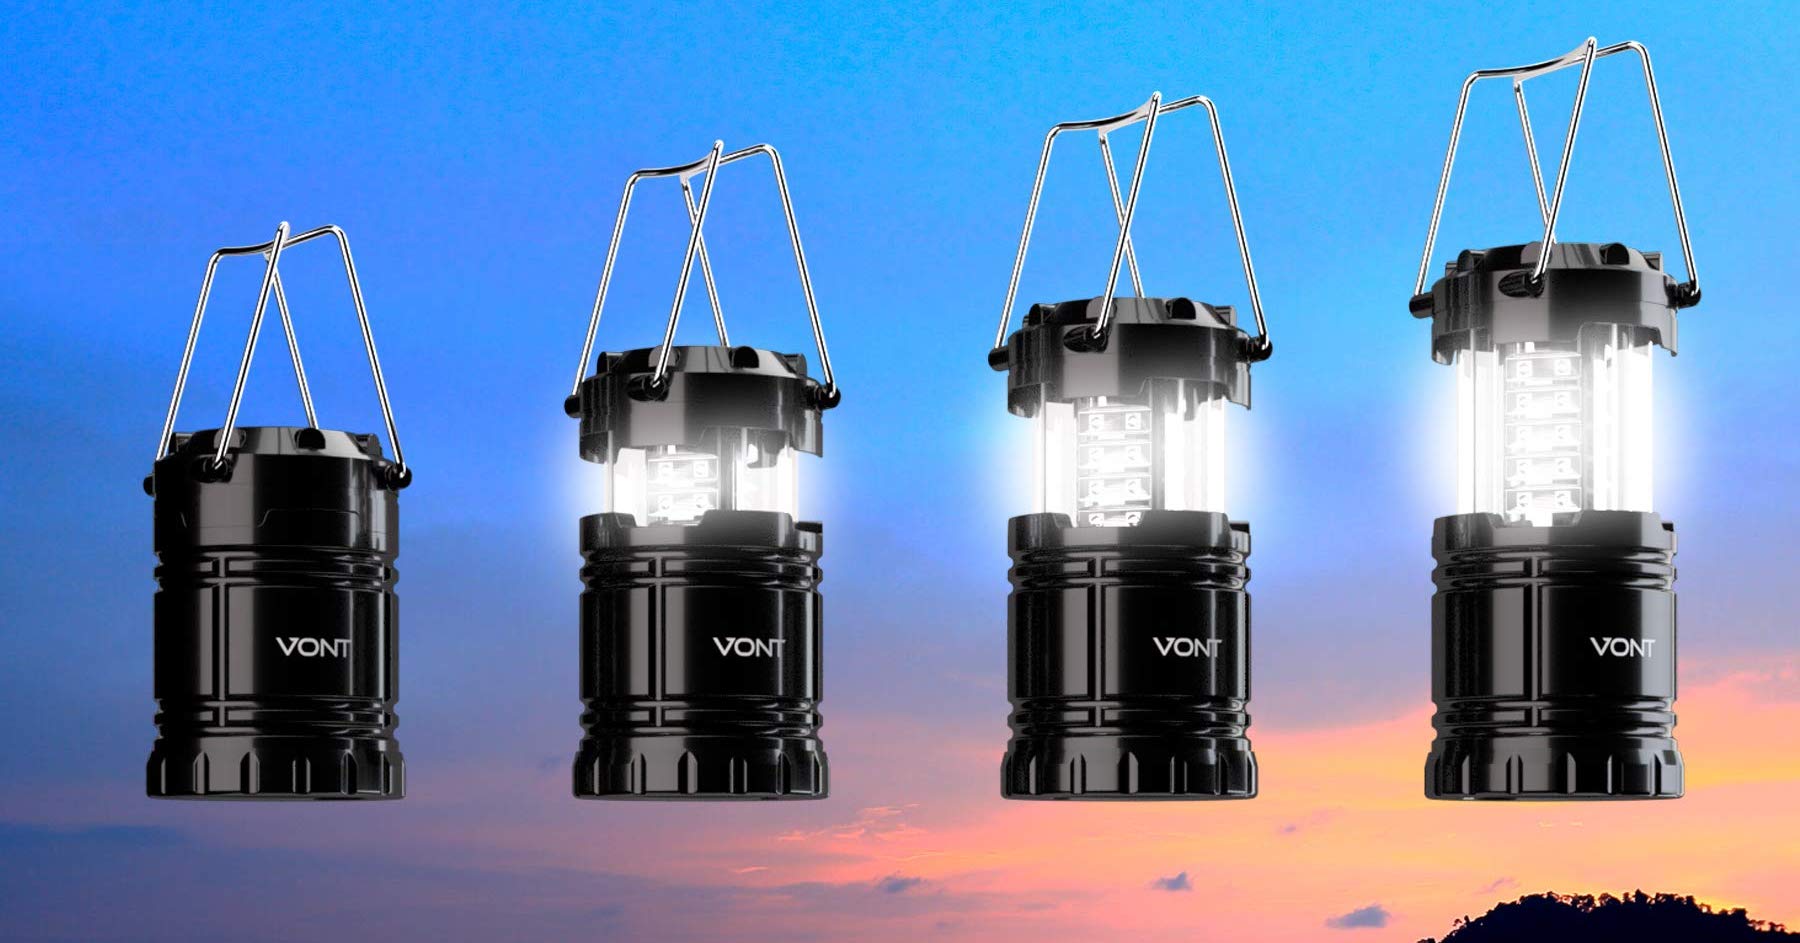 Vont 4 Pack LED Camping Lantern, LED Lantern, Suitable for